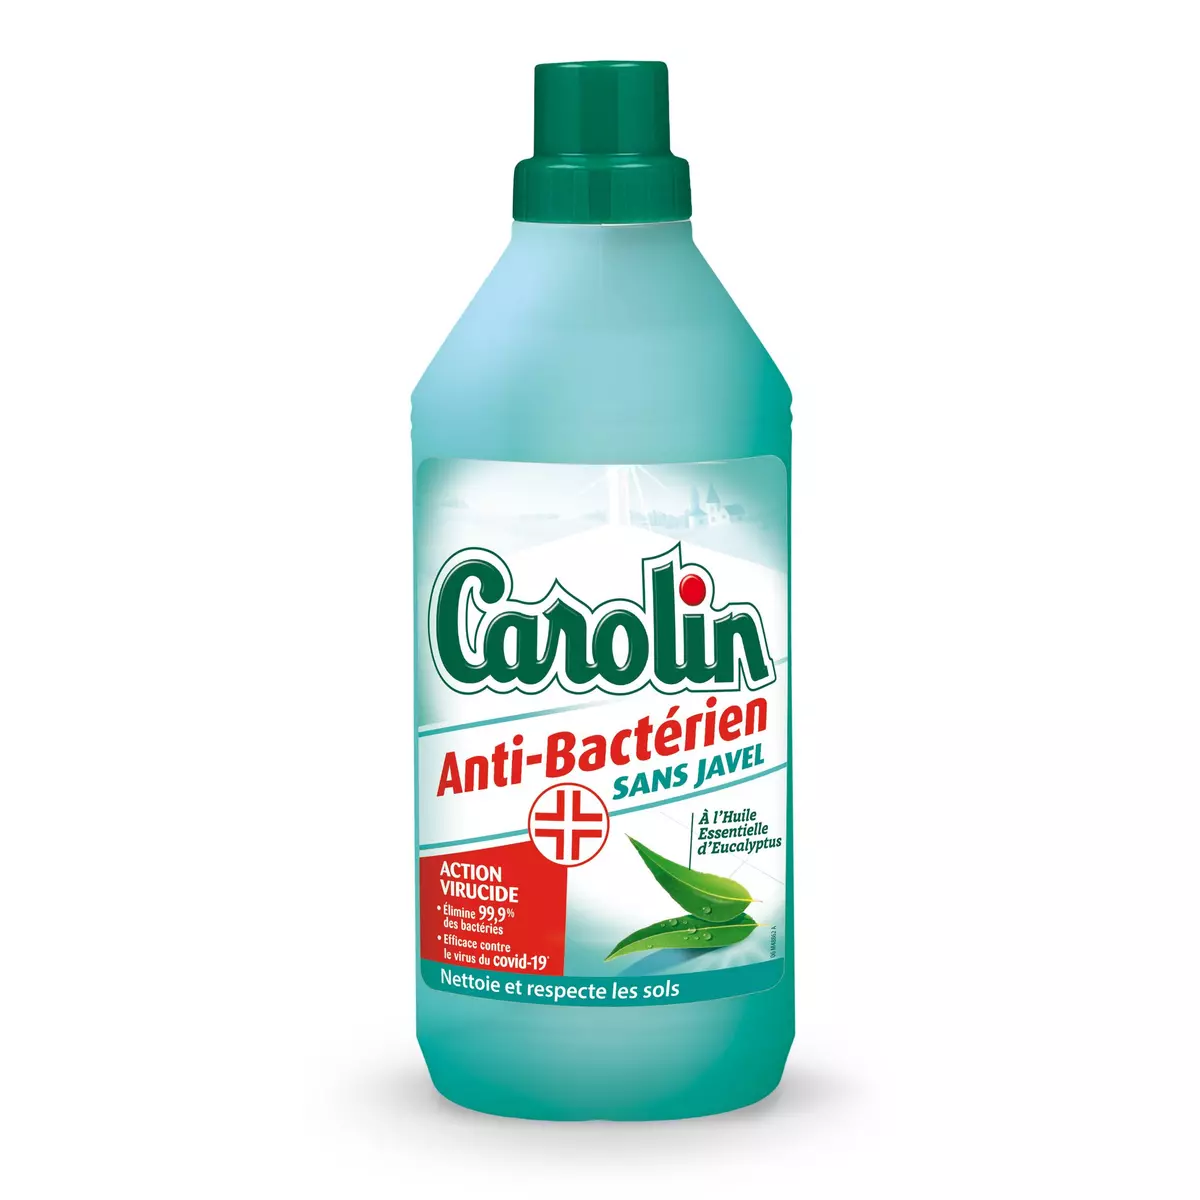 CAROLIN Nettoyant sol anti-bactérien eucalyptus 1l